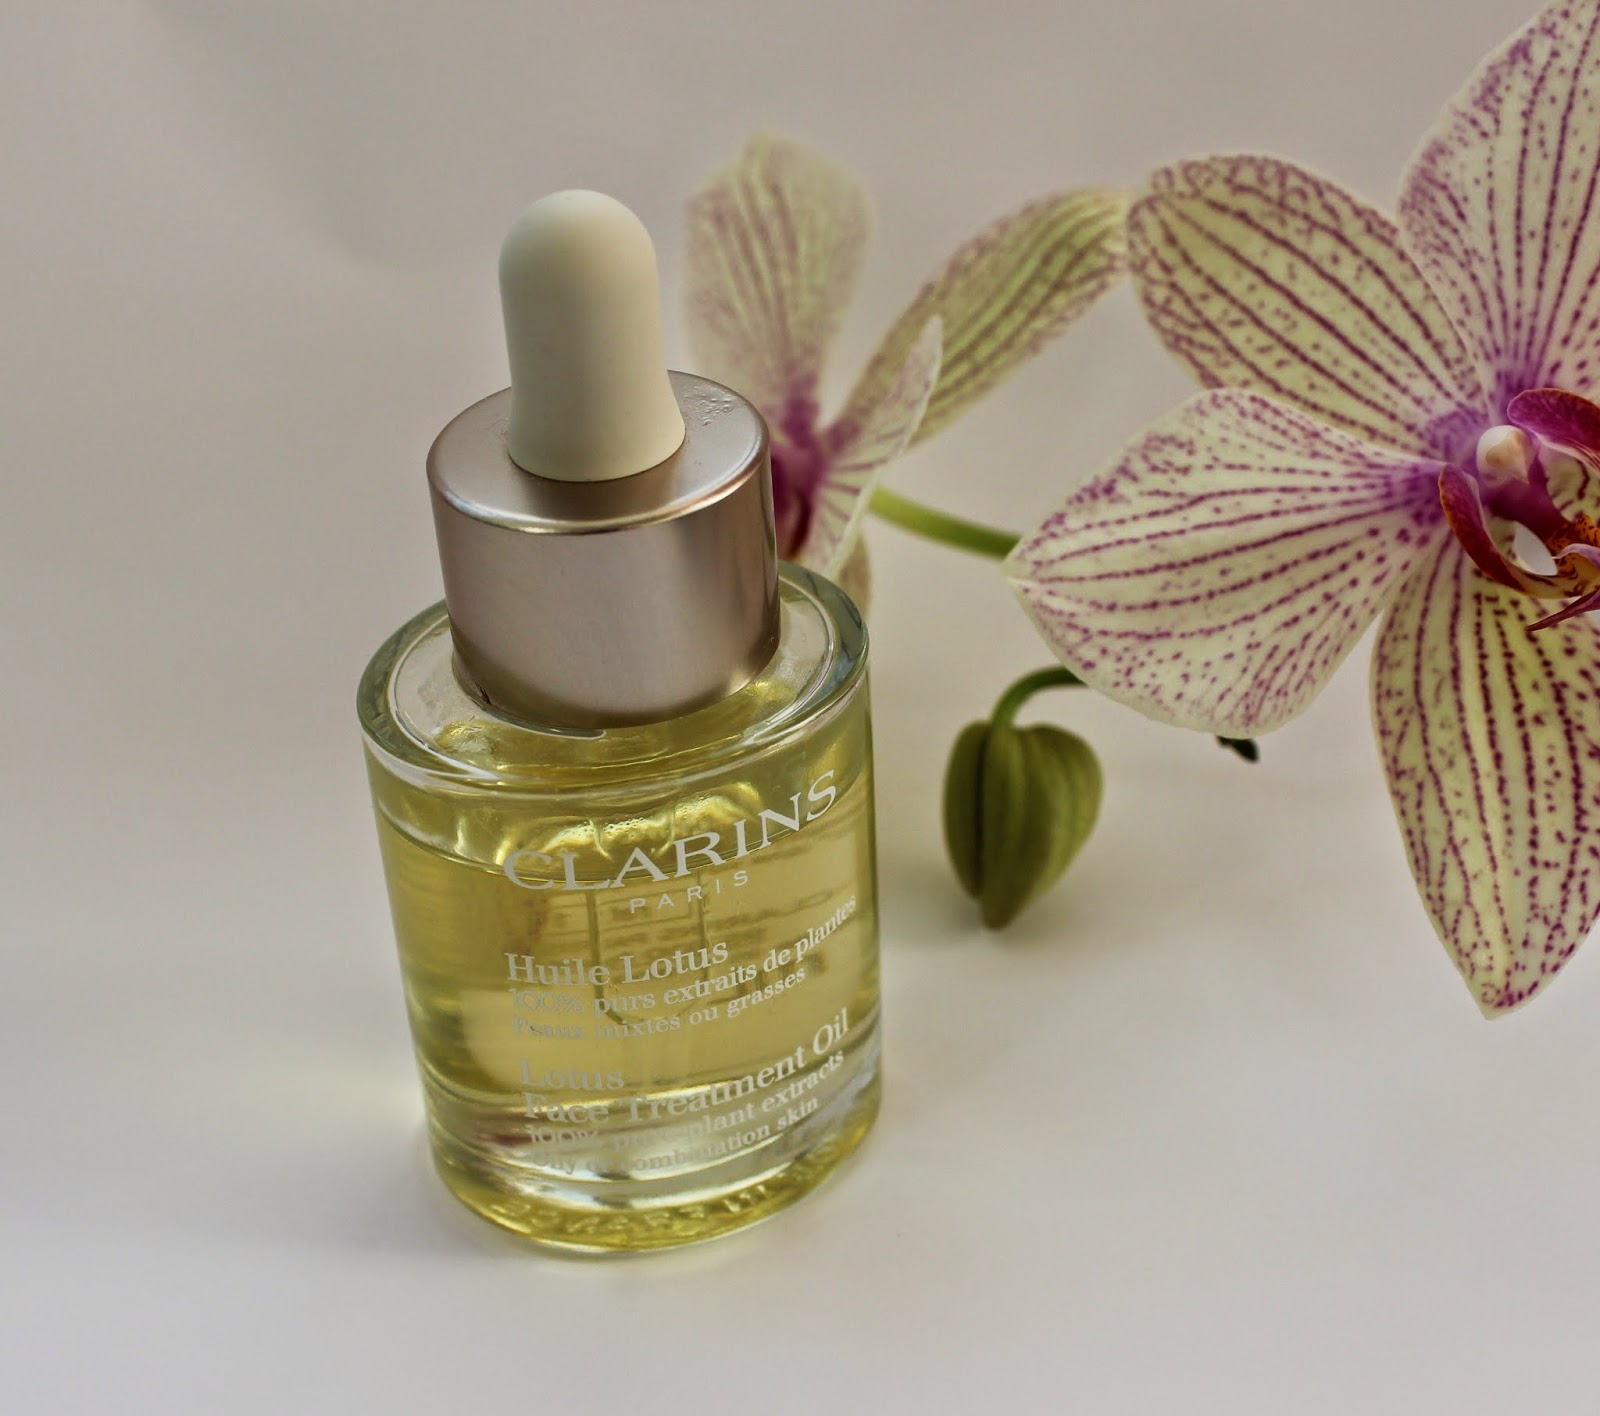 Clarins Lotus Face Treatment Oil 